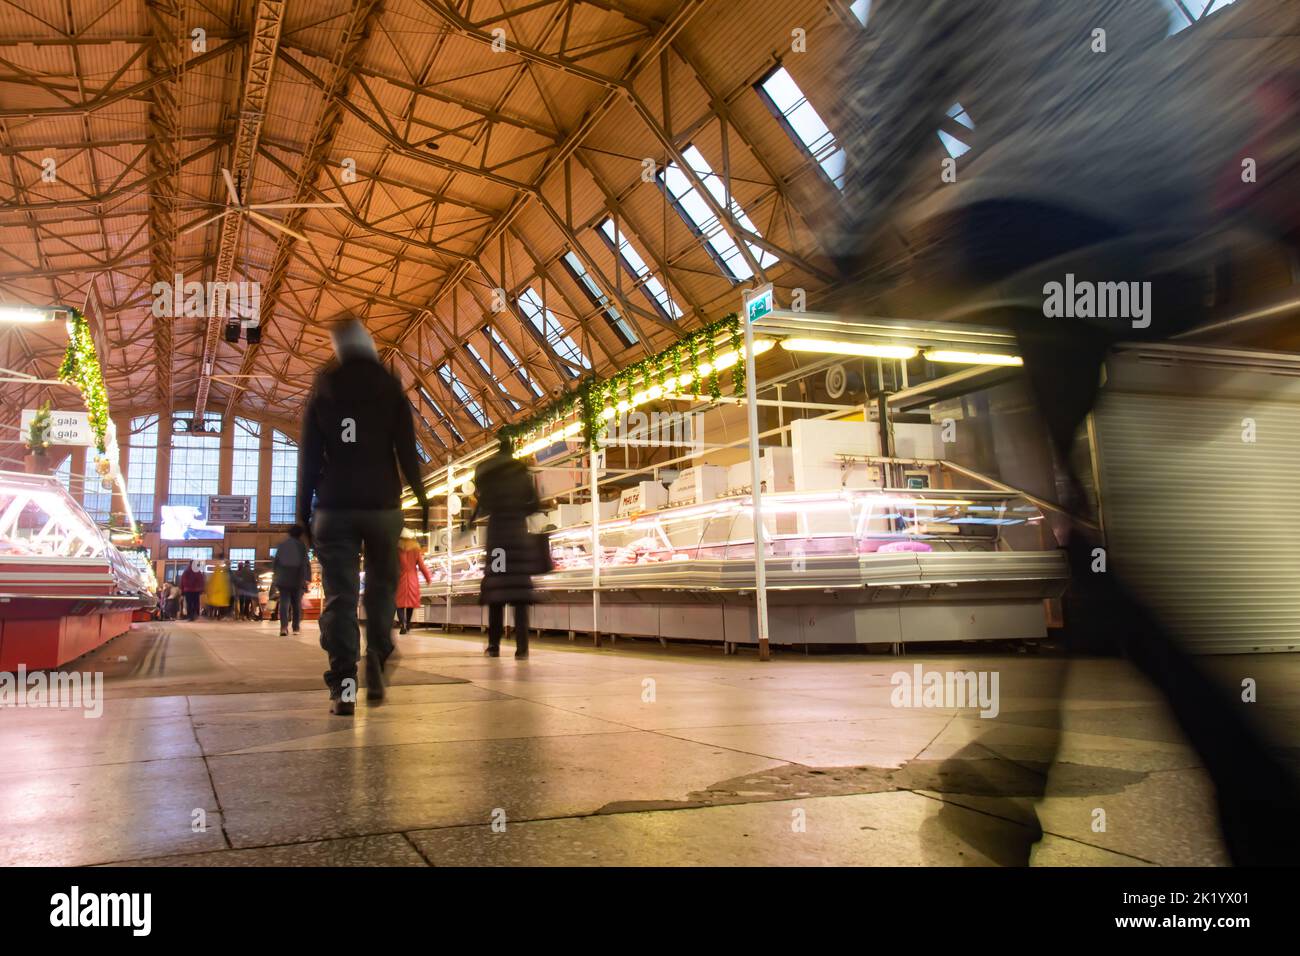 RGA, Lettland - 31. Dezember 2019: Personen zu Fuß in Riga zentraler Markt, beliebte Touristenattraktion, in alten Zeppelin-Hangars gebaut Stockfoto